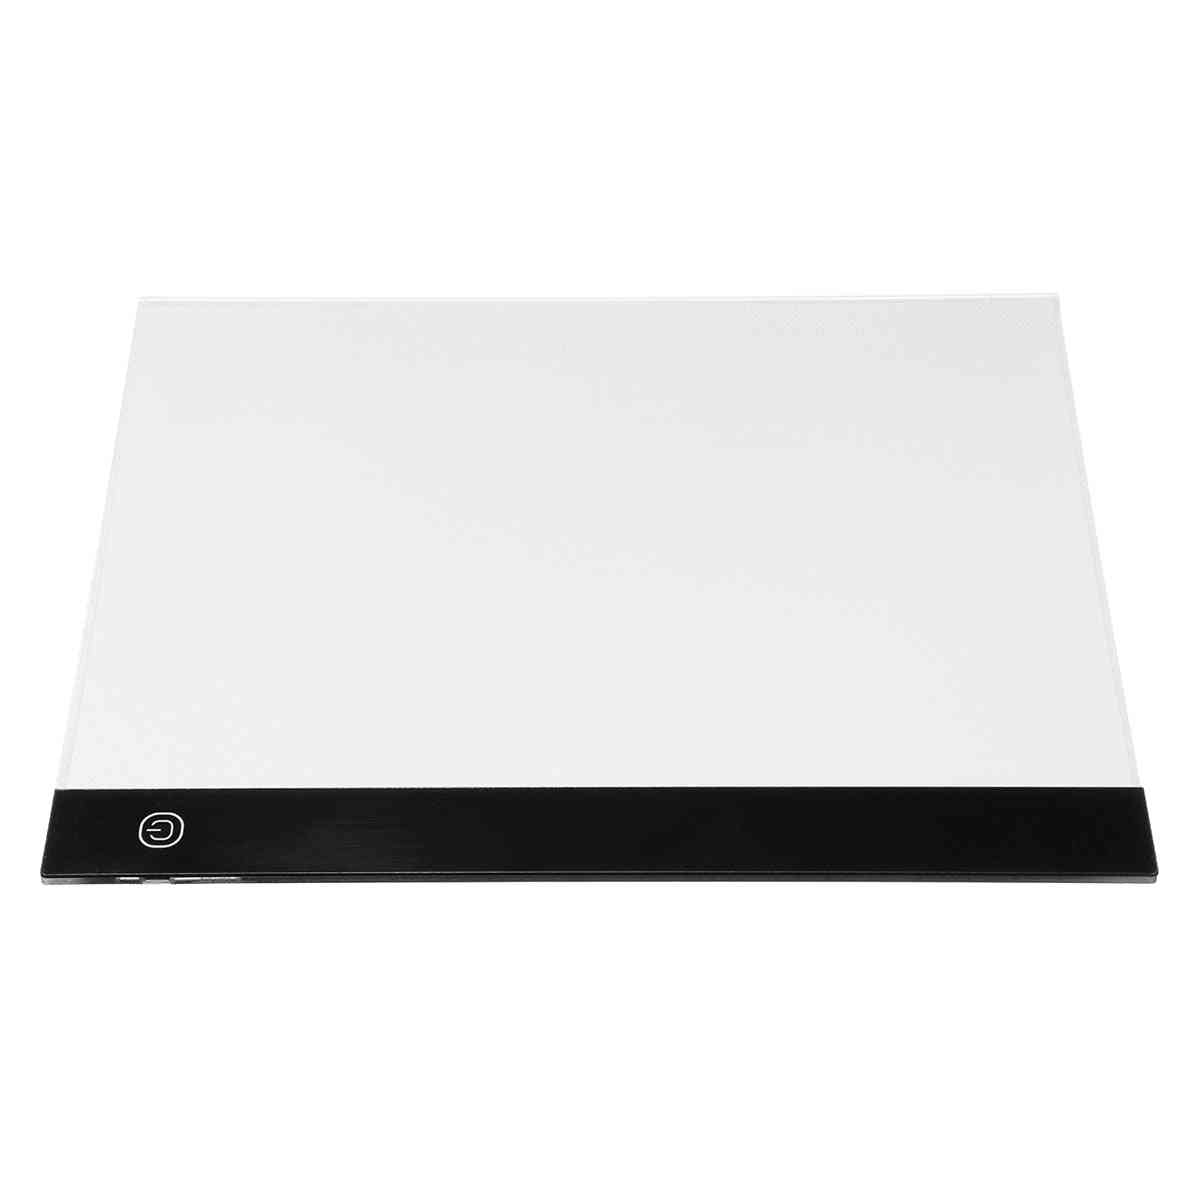 A4 Drawing Tablet Digital Graphics Pad/usb Led Light Box